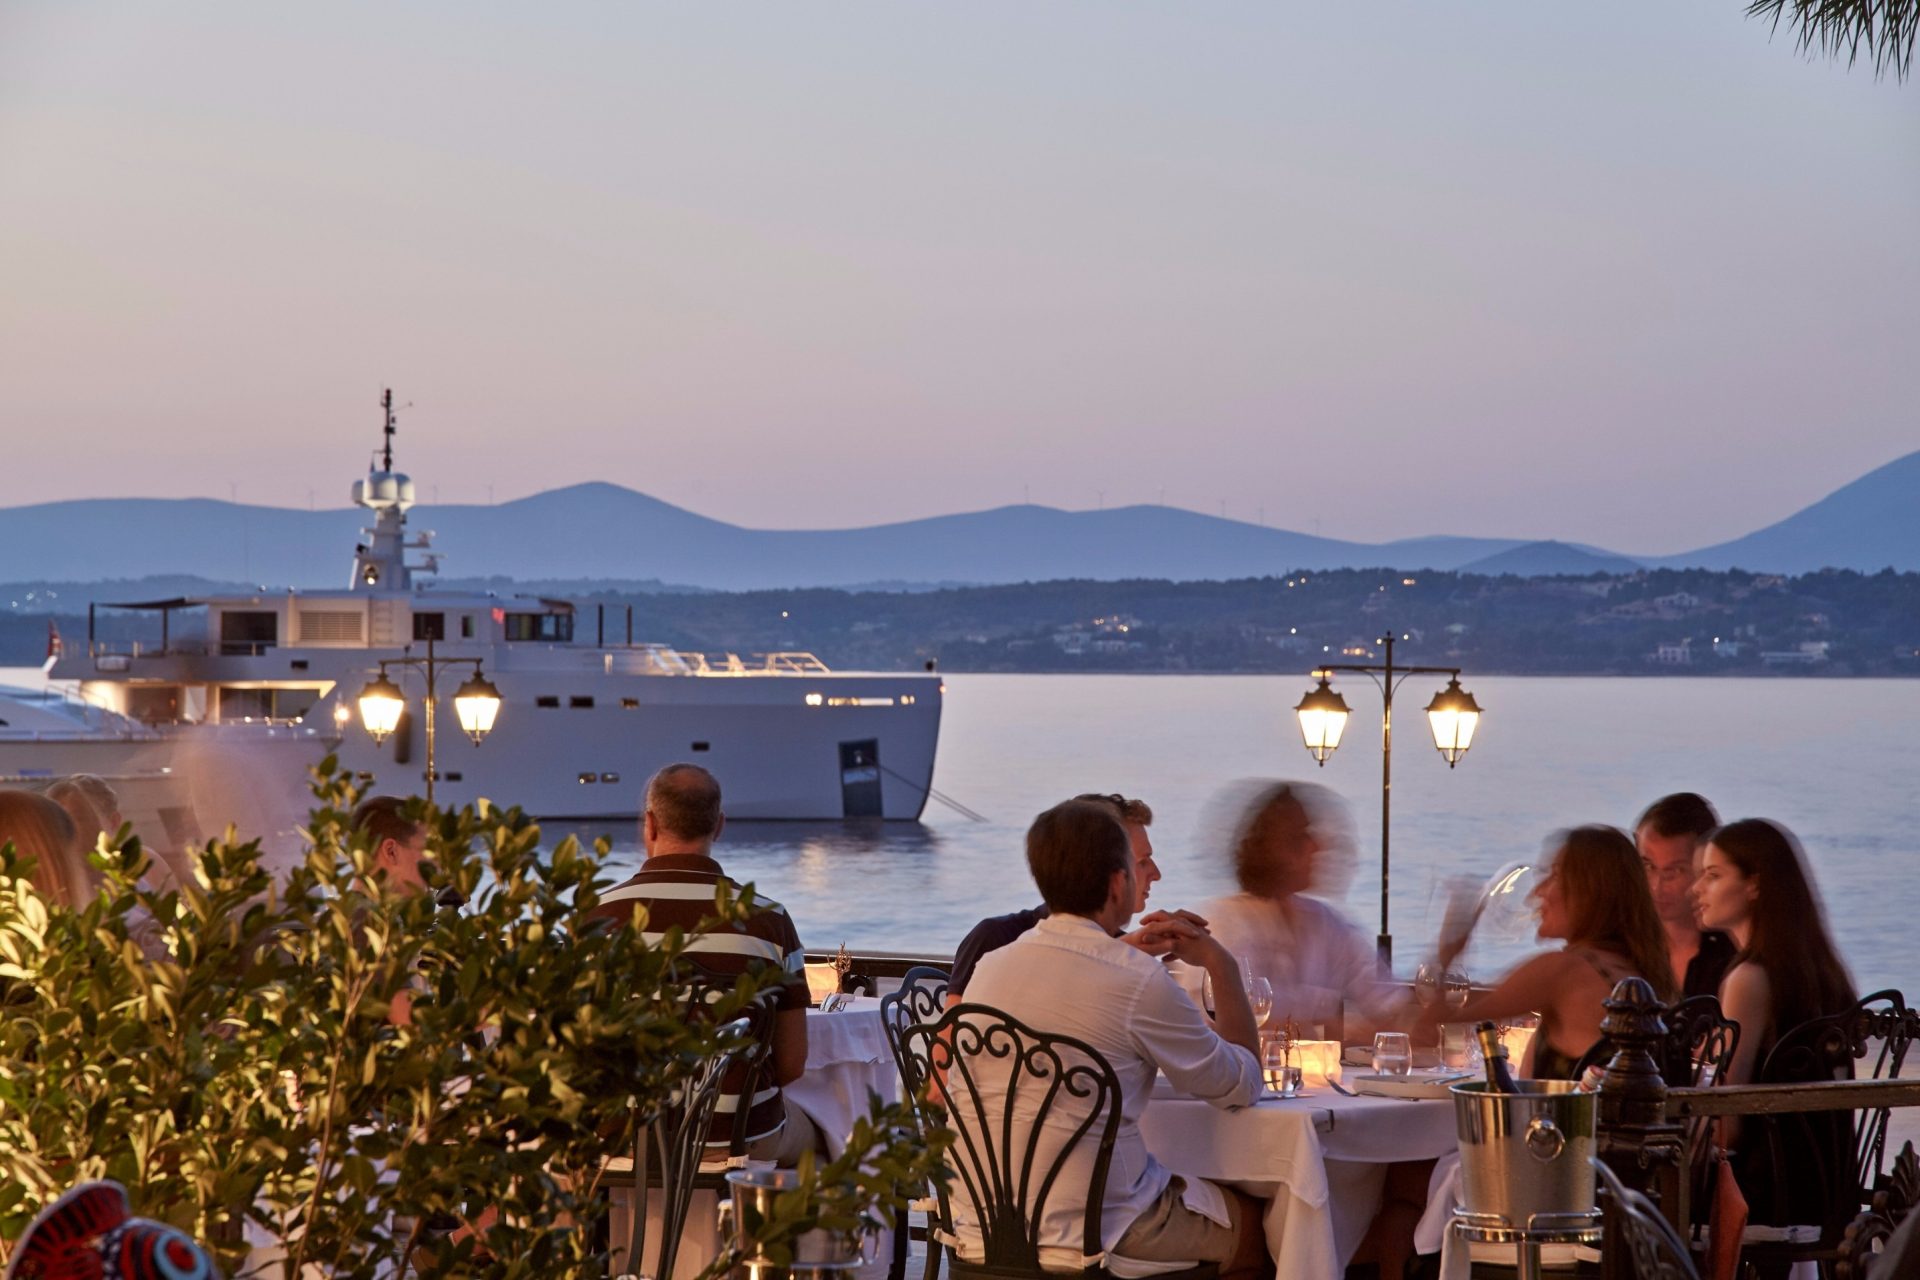 On the Verandah restaurant at the Poseidonion square in Spetses